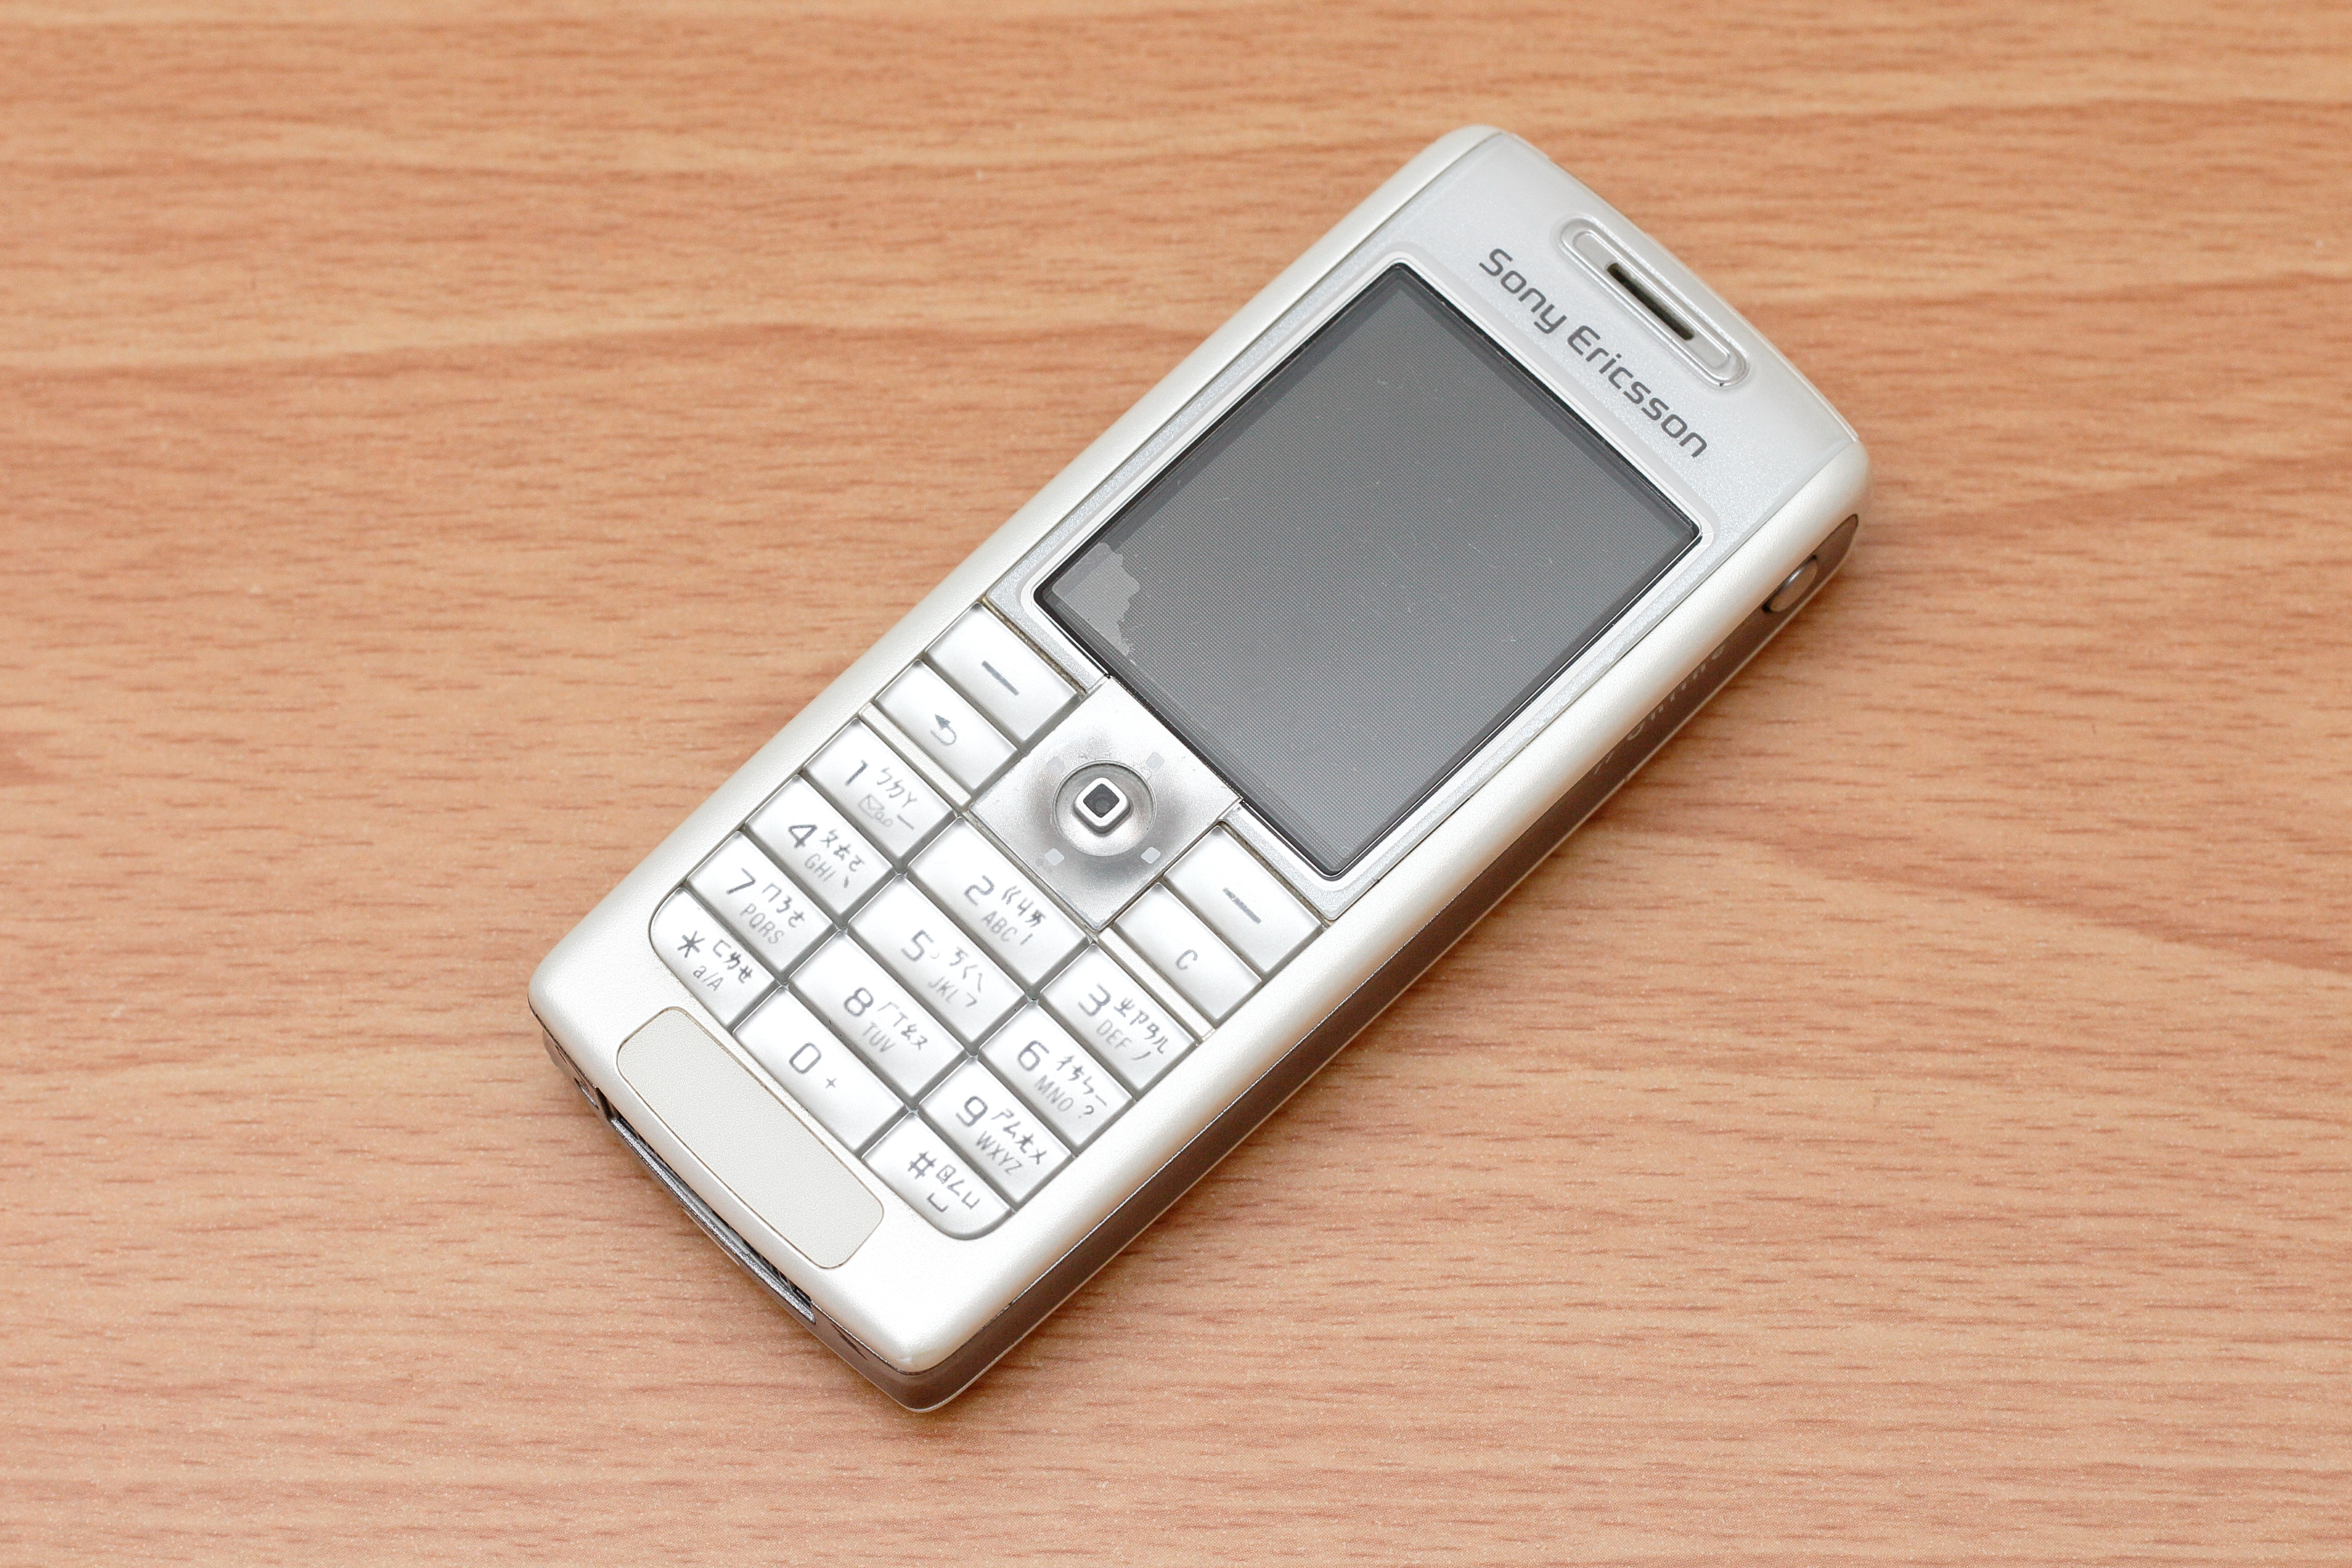 File Sony Ericsson T630 29625868490 Jpg Wikimedia Commons